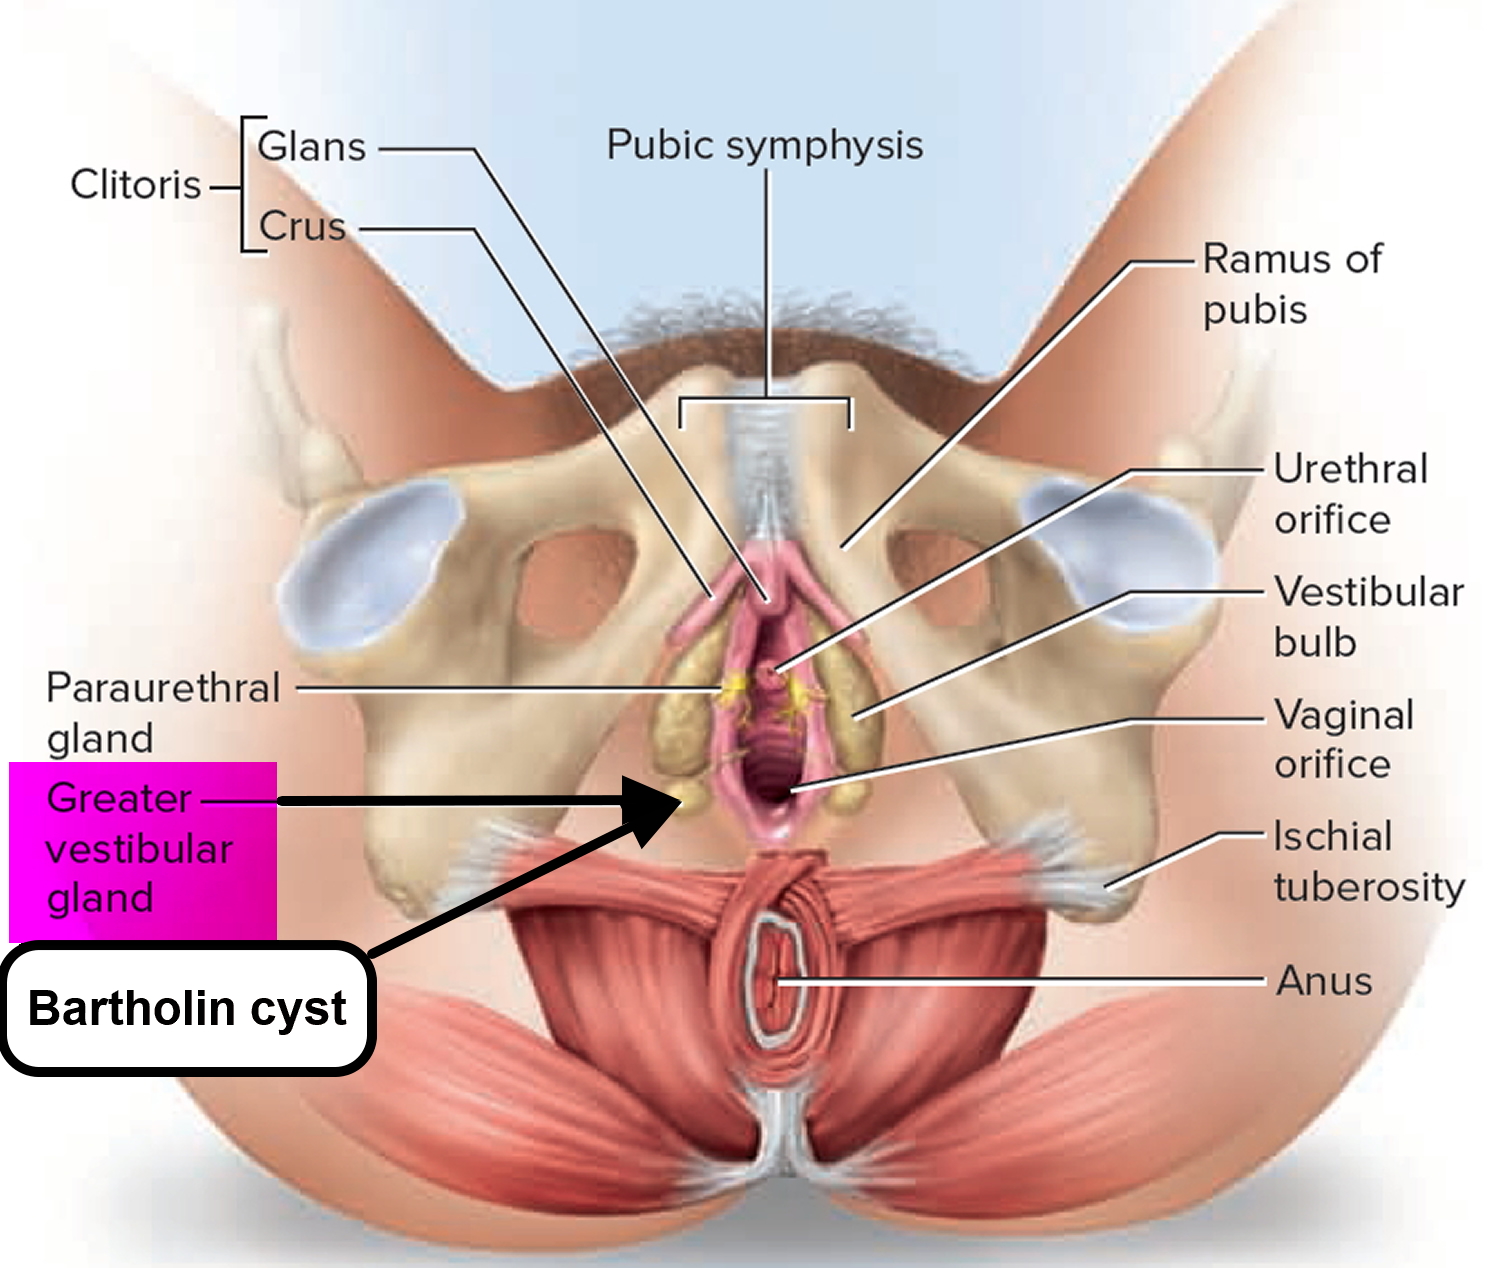 bartholin gland - greater vestibular gland